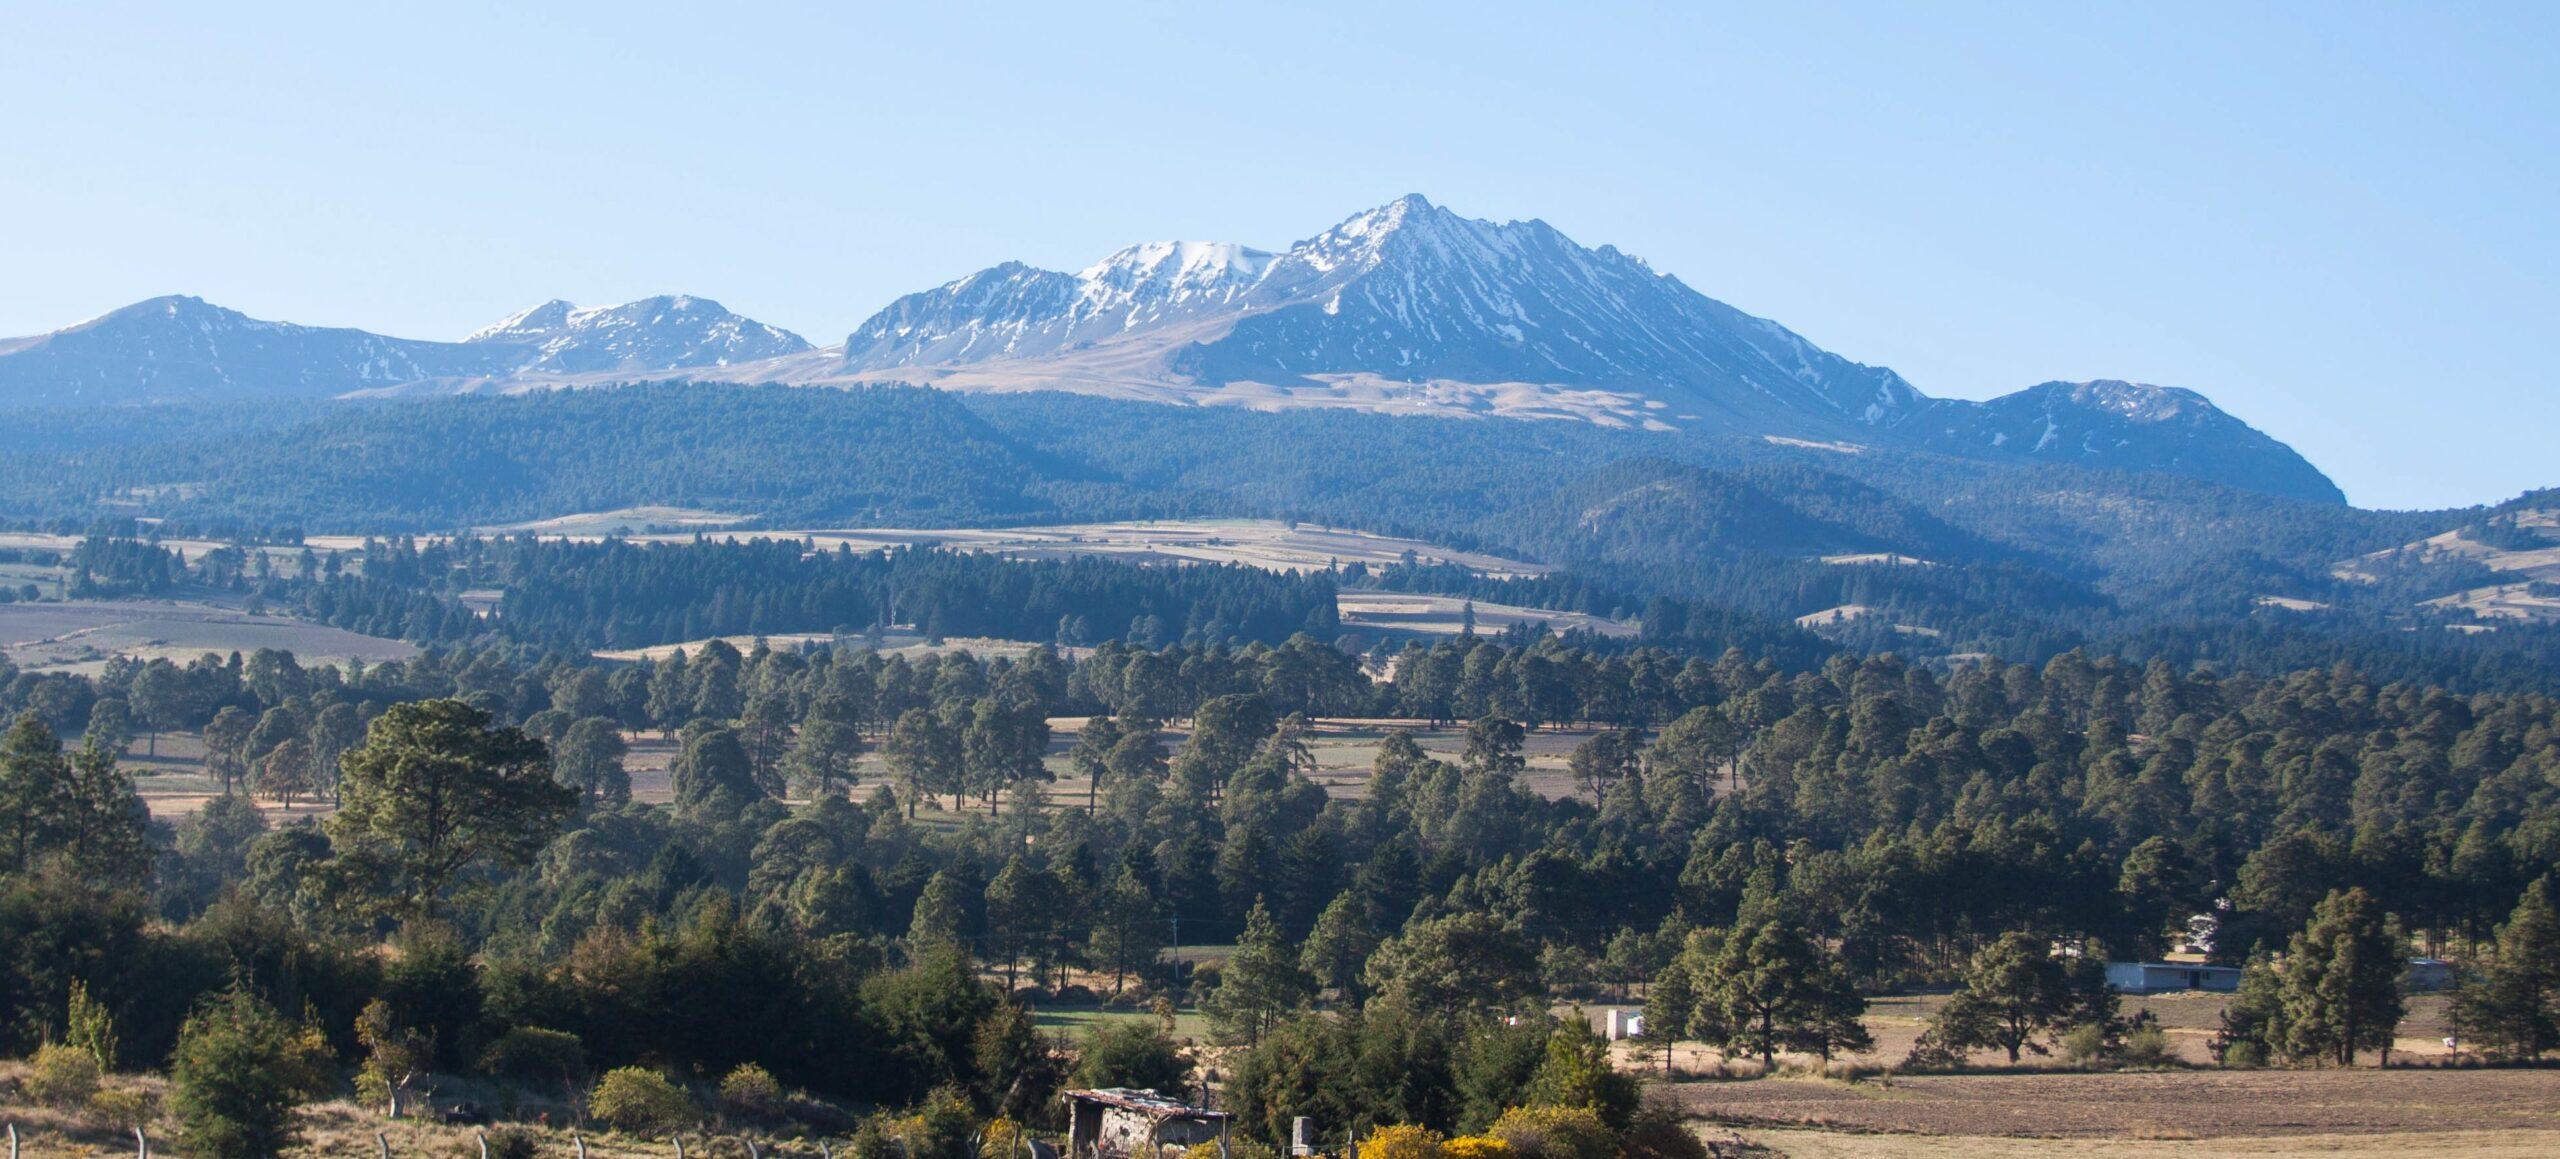 La Semarnat aprueba la tala comercial de 33% del bosque del Nevado de Toluca